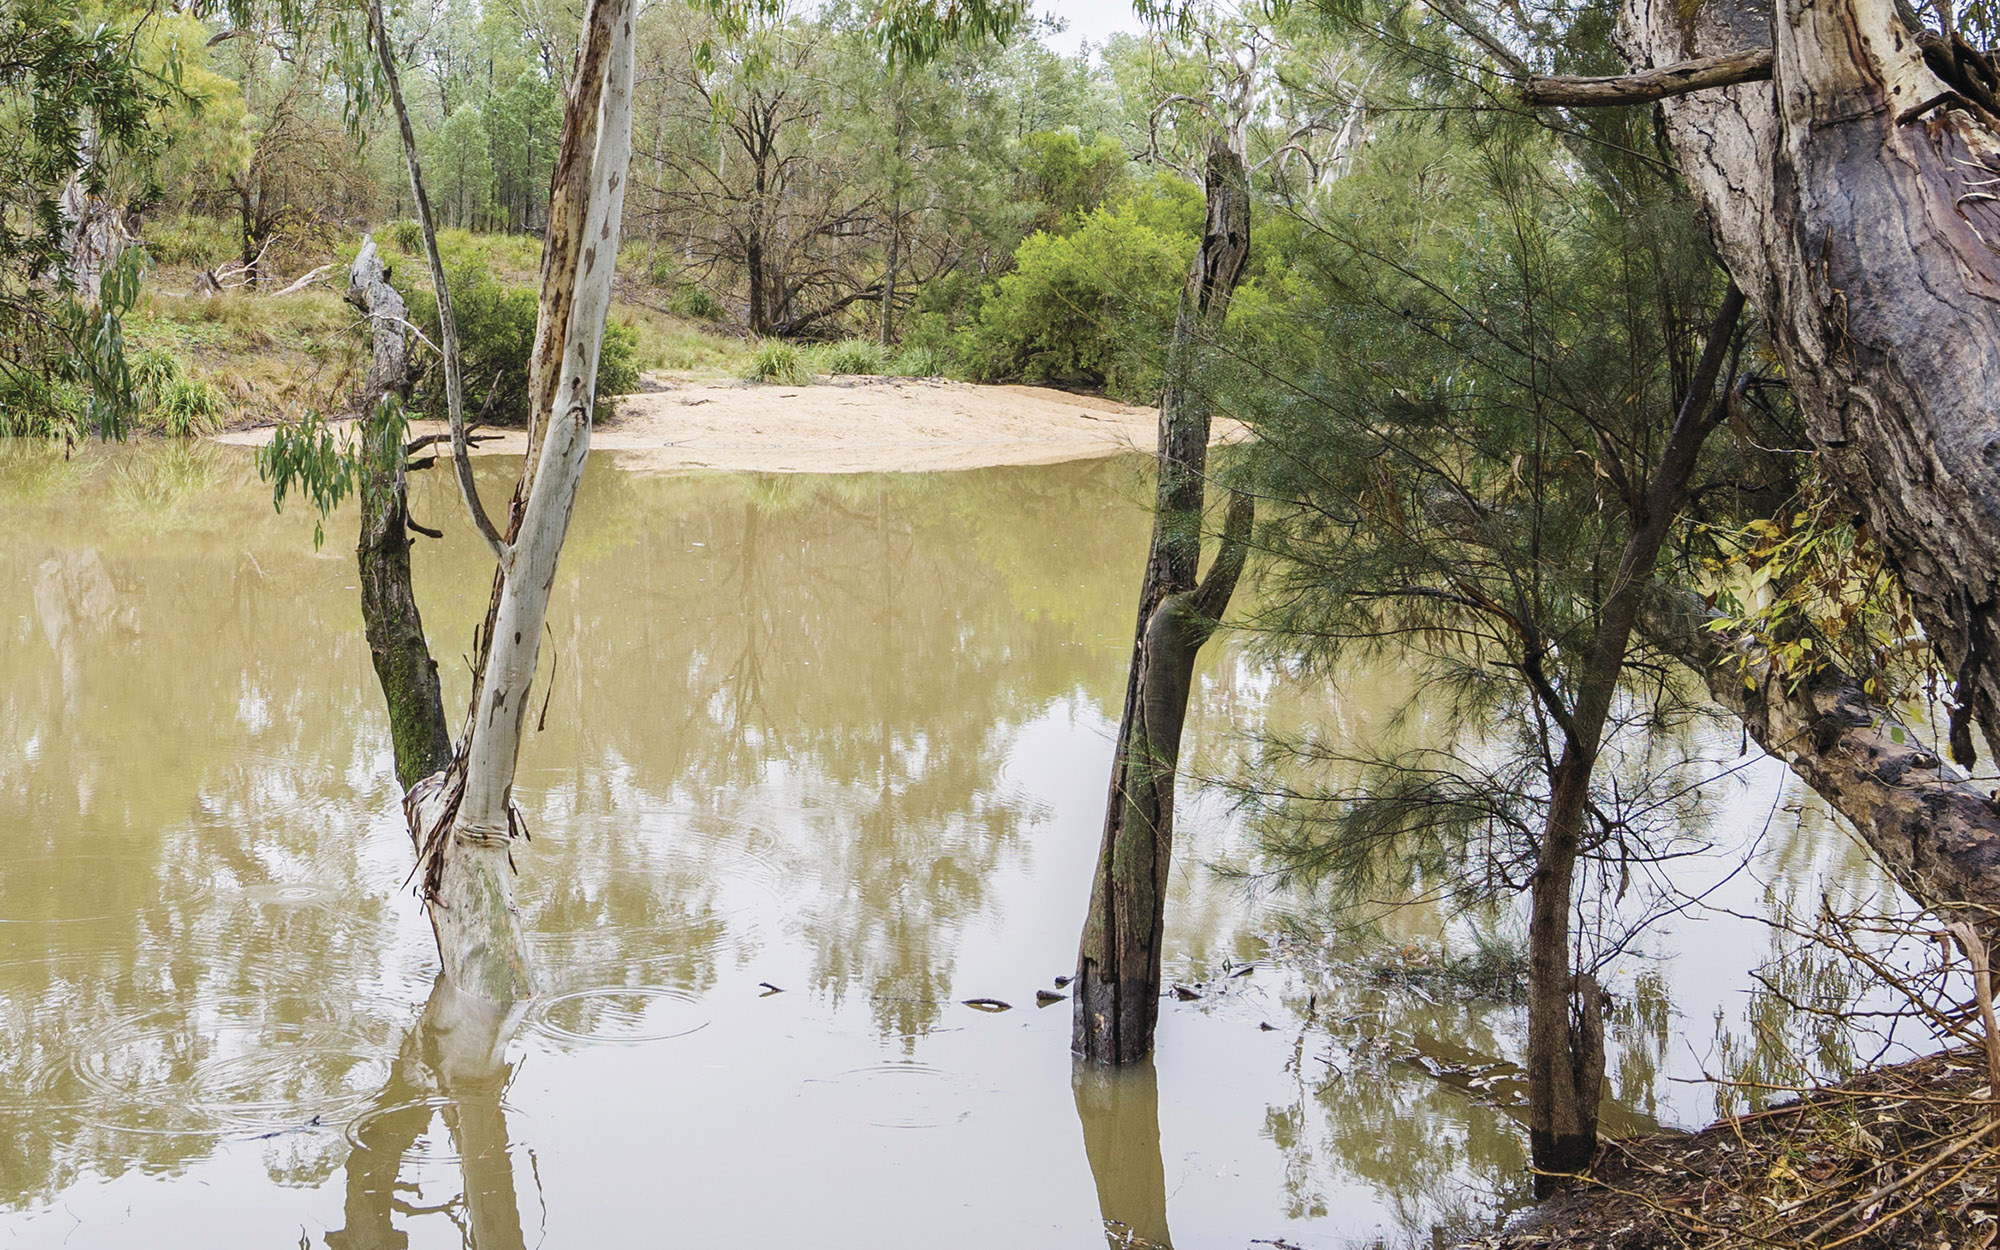 Macintyre River in Kwiambal National Park, New South Wales.